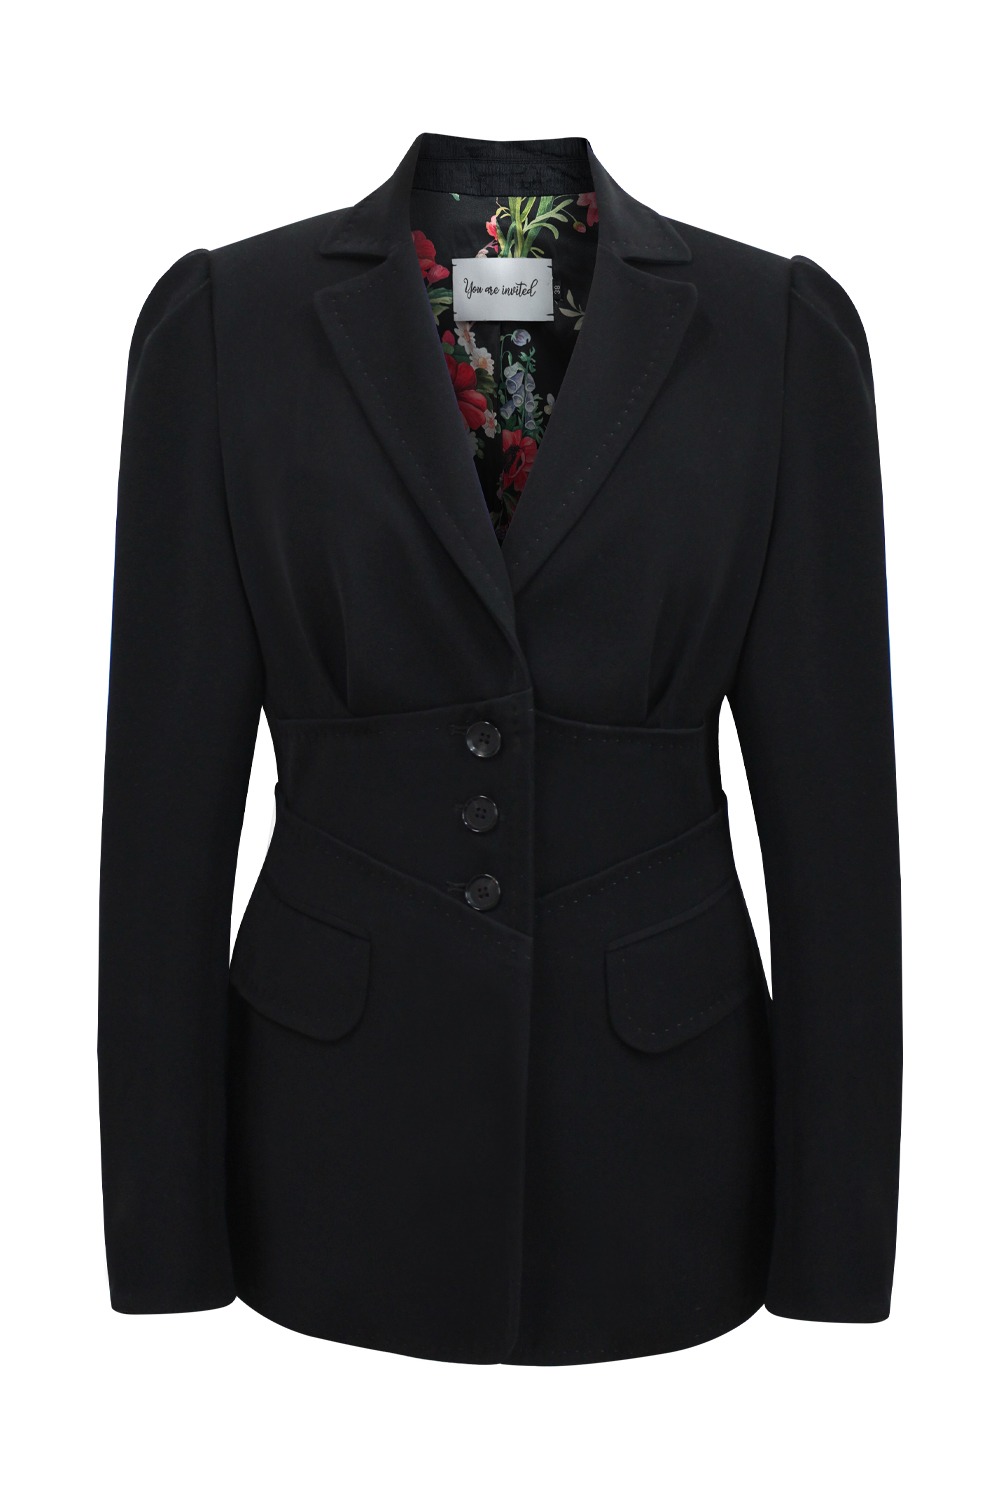 [Order Made] Define silhouette jacket (Black)